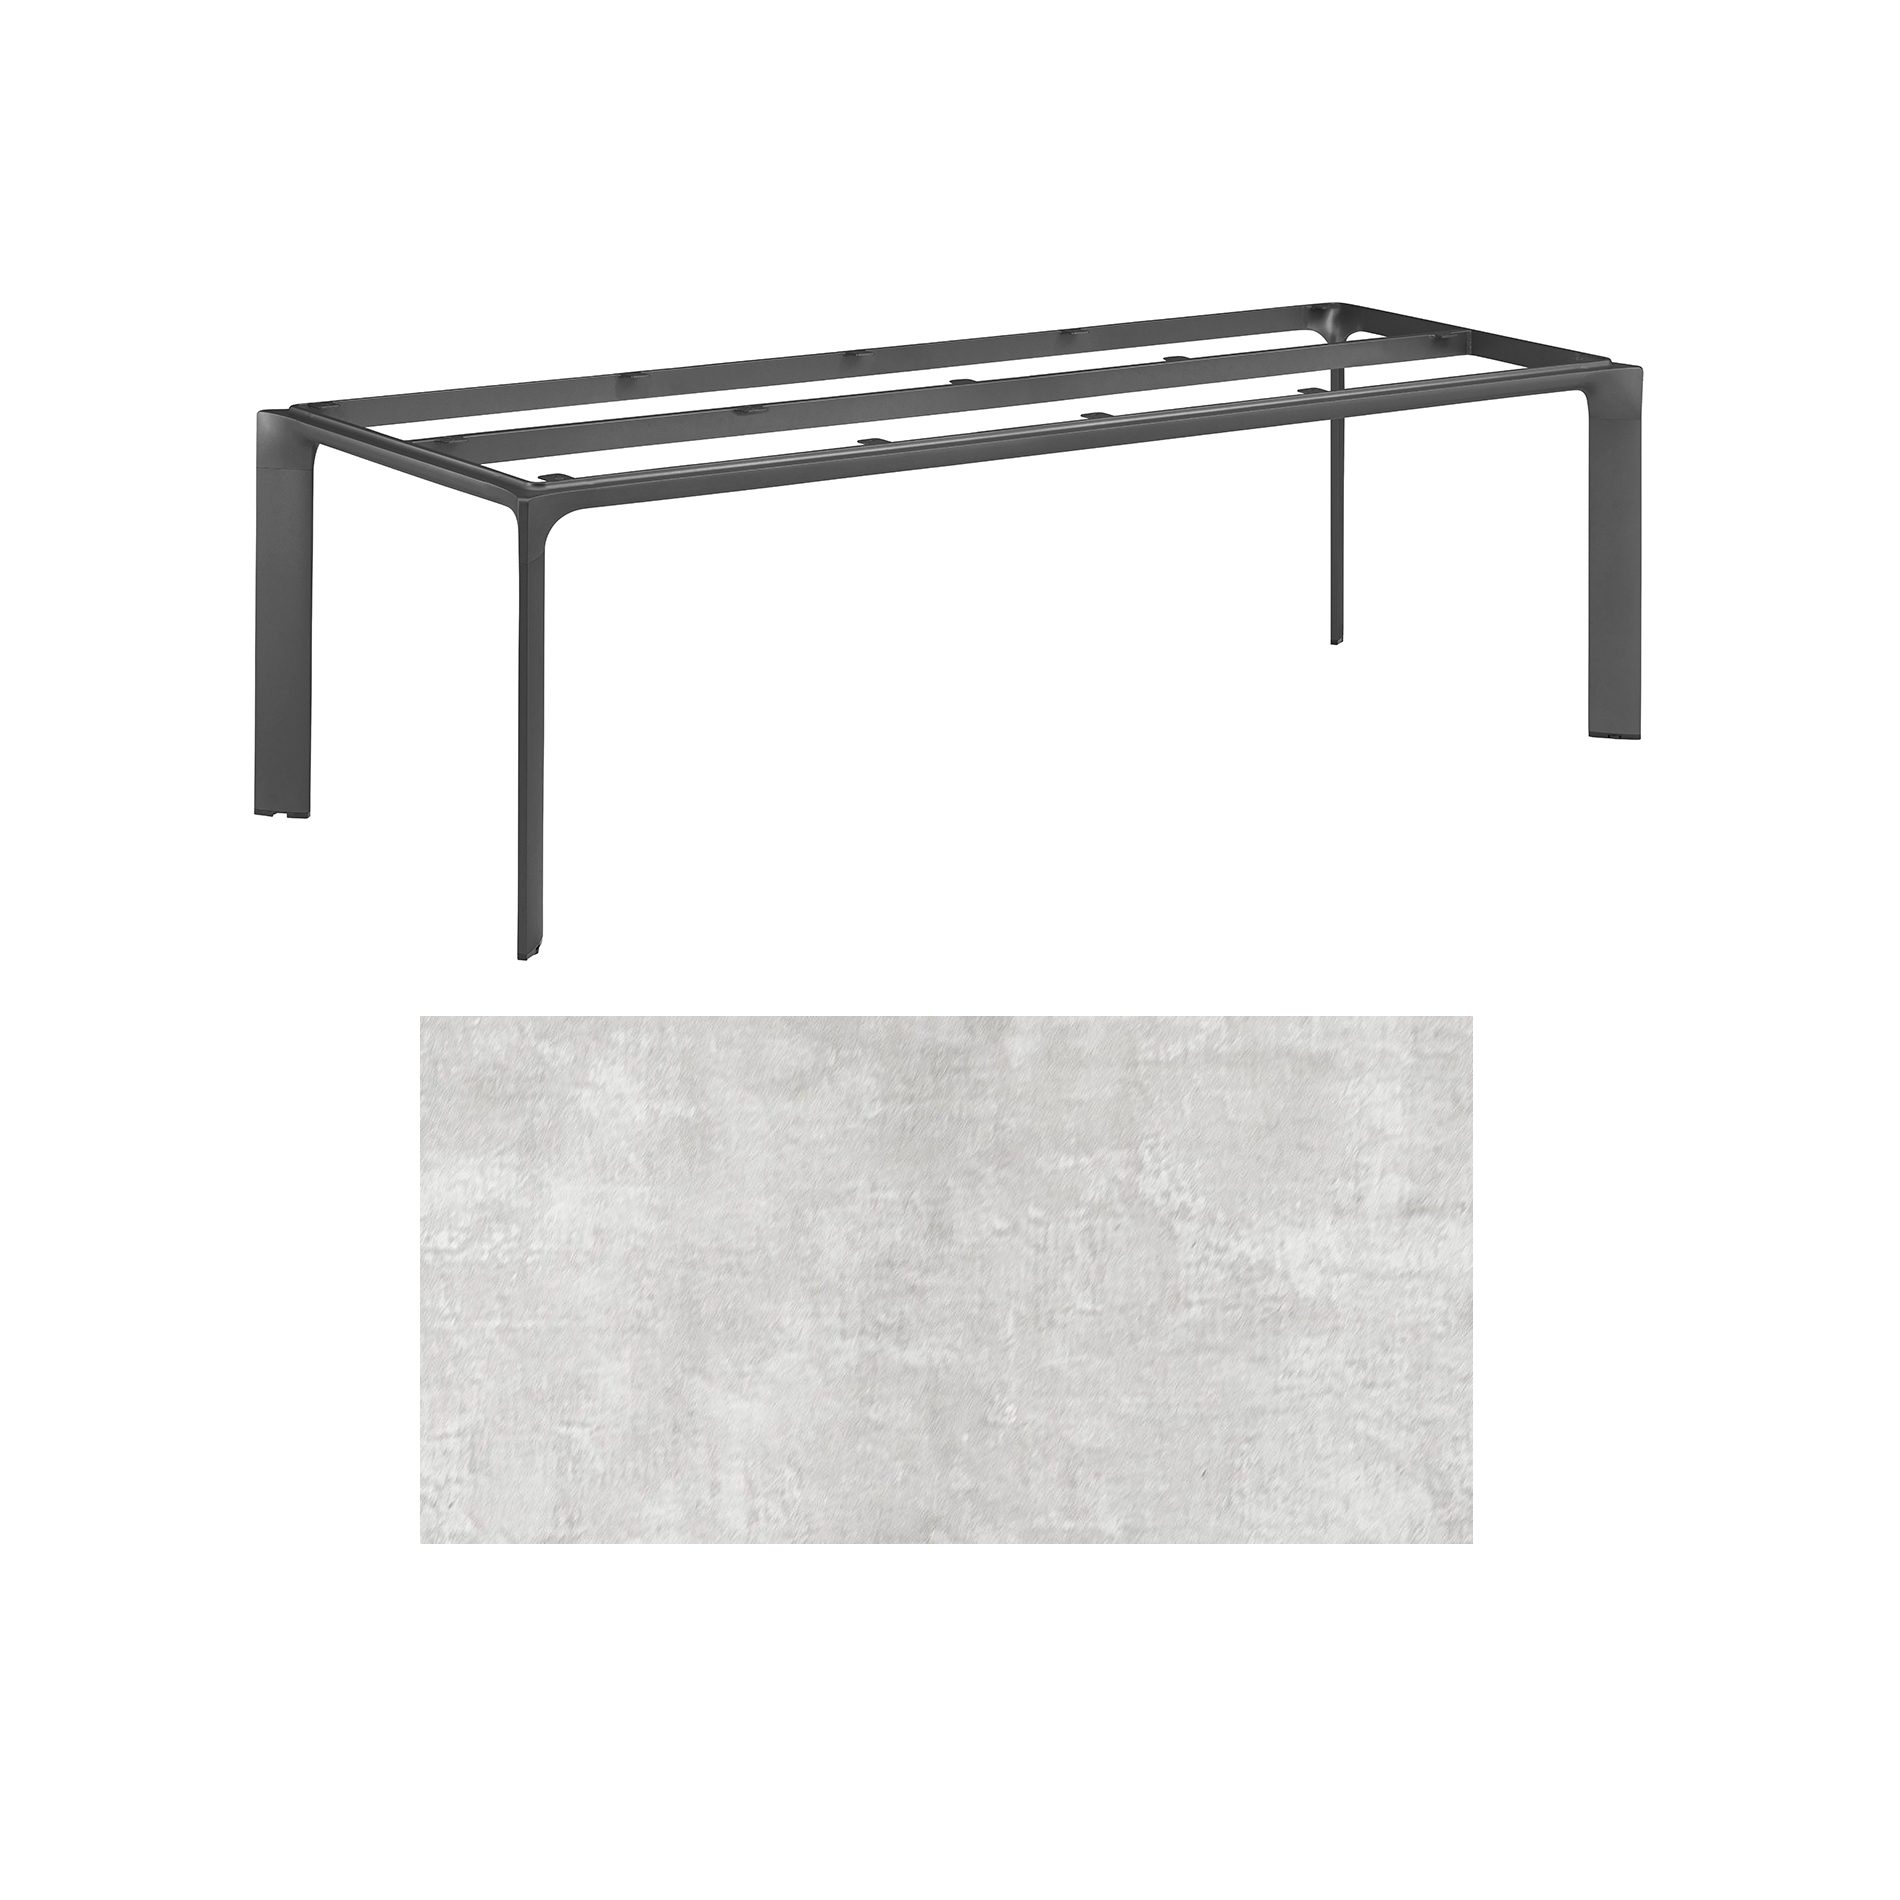 Kettler "Diamond" Tischsystem Gartentisch, Gestell Aluminium anthrazit, Tischplatte HPL hellgrau meliert, 220x95 cm